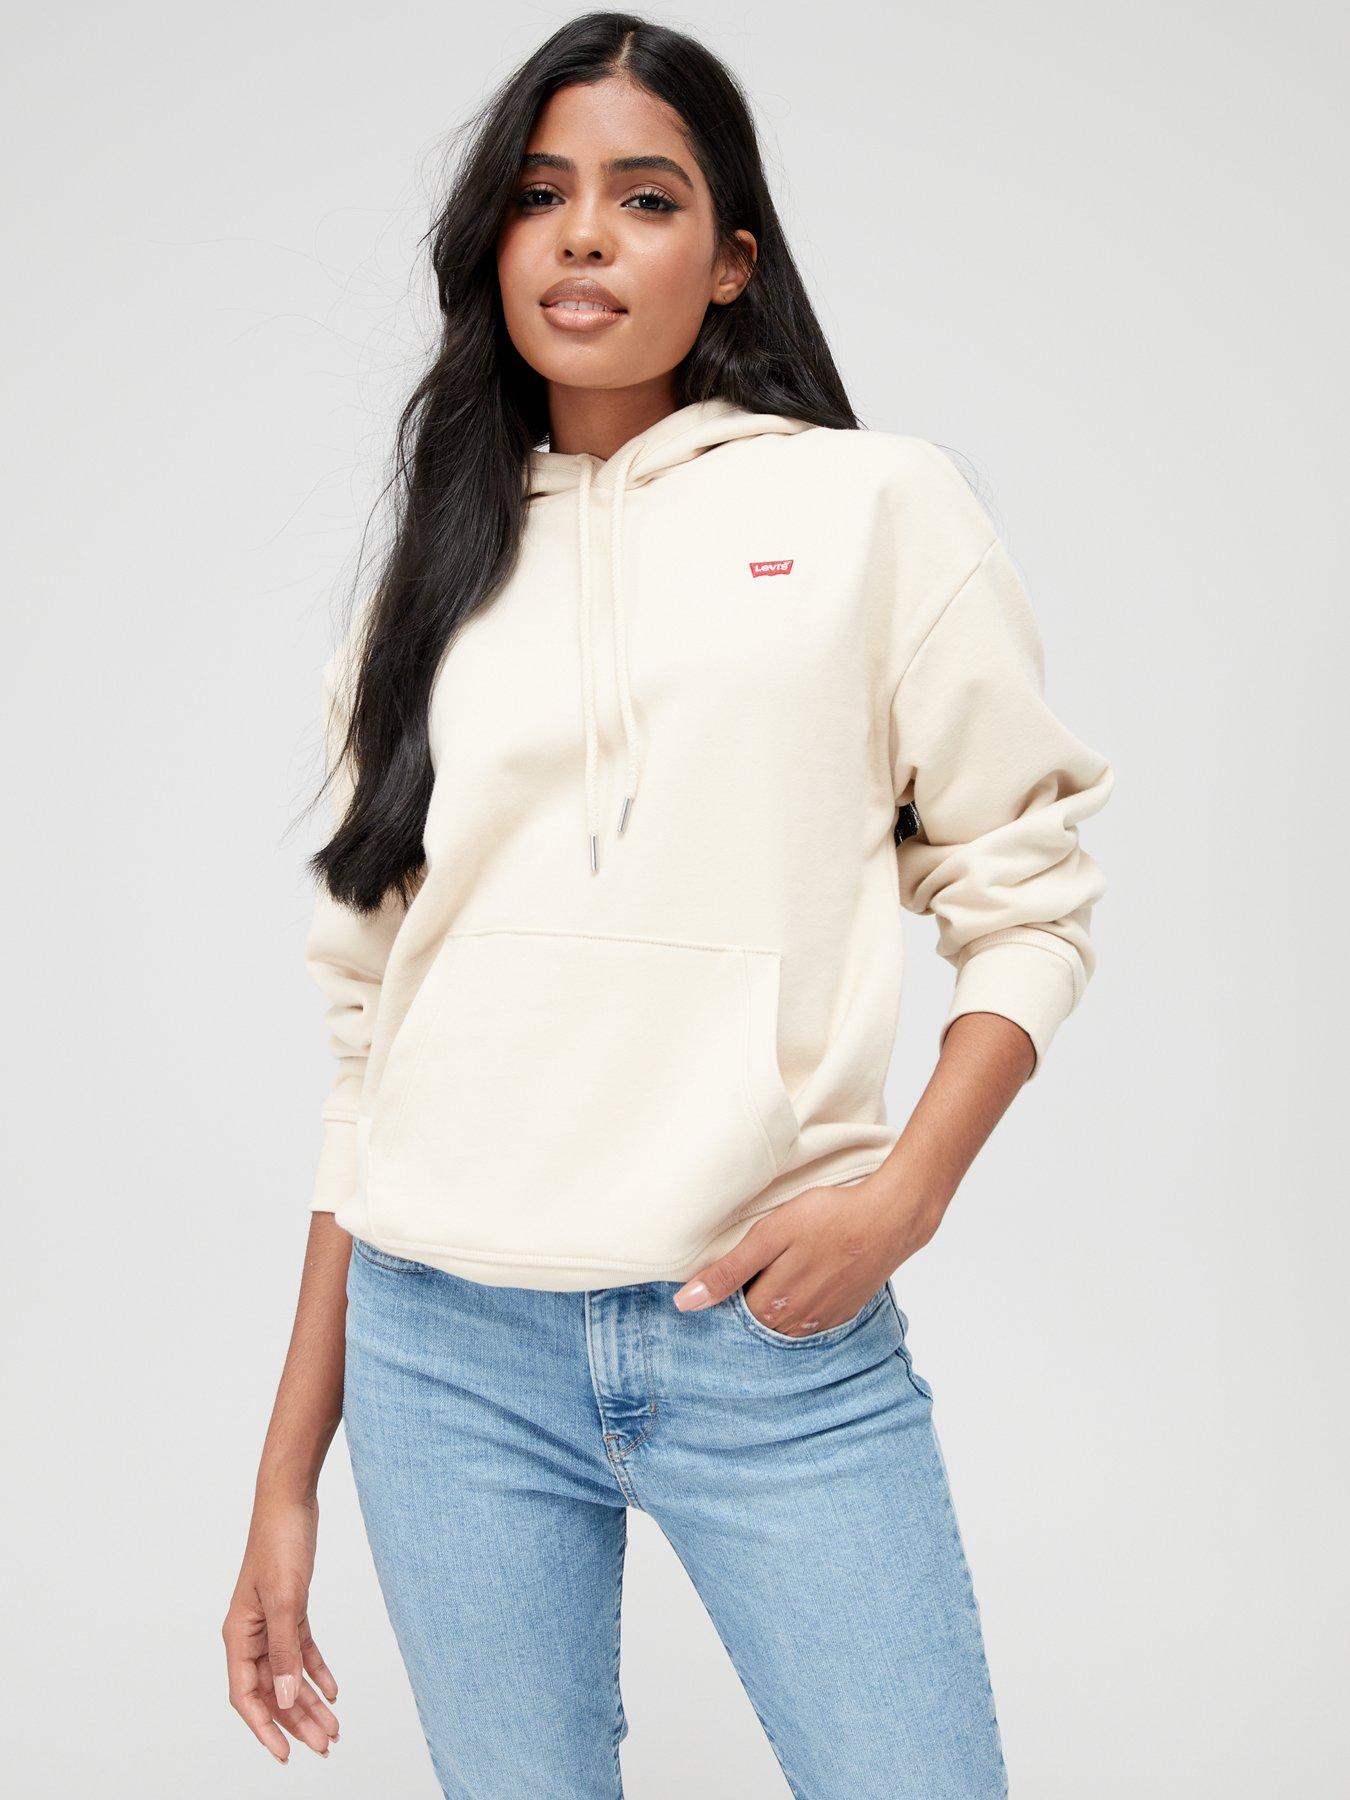 WOMEN FASHION Jumpers & Sweatshirts Sweatshirt Sequin discount 57% ONLY sweatshirt Black S 